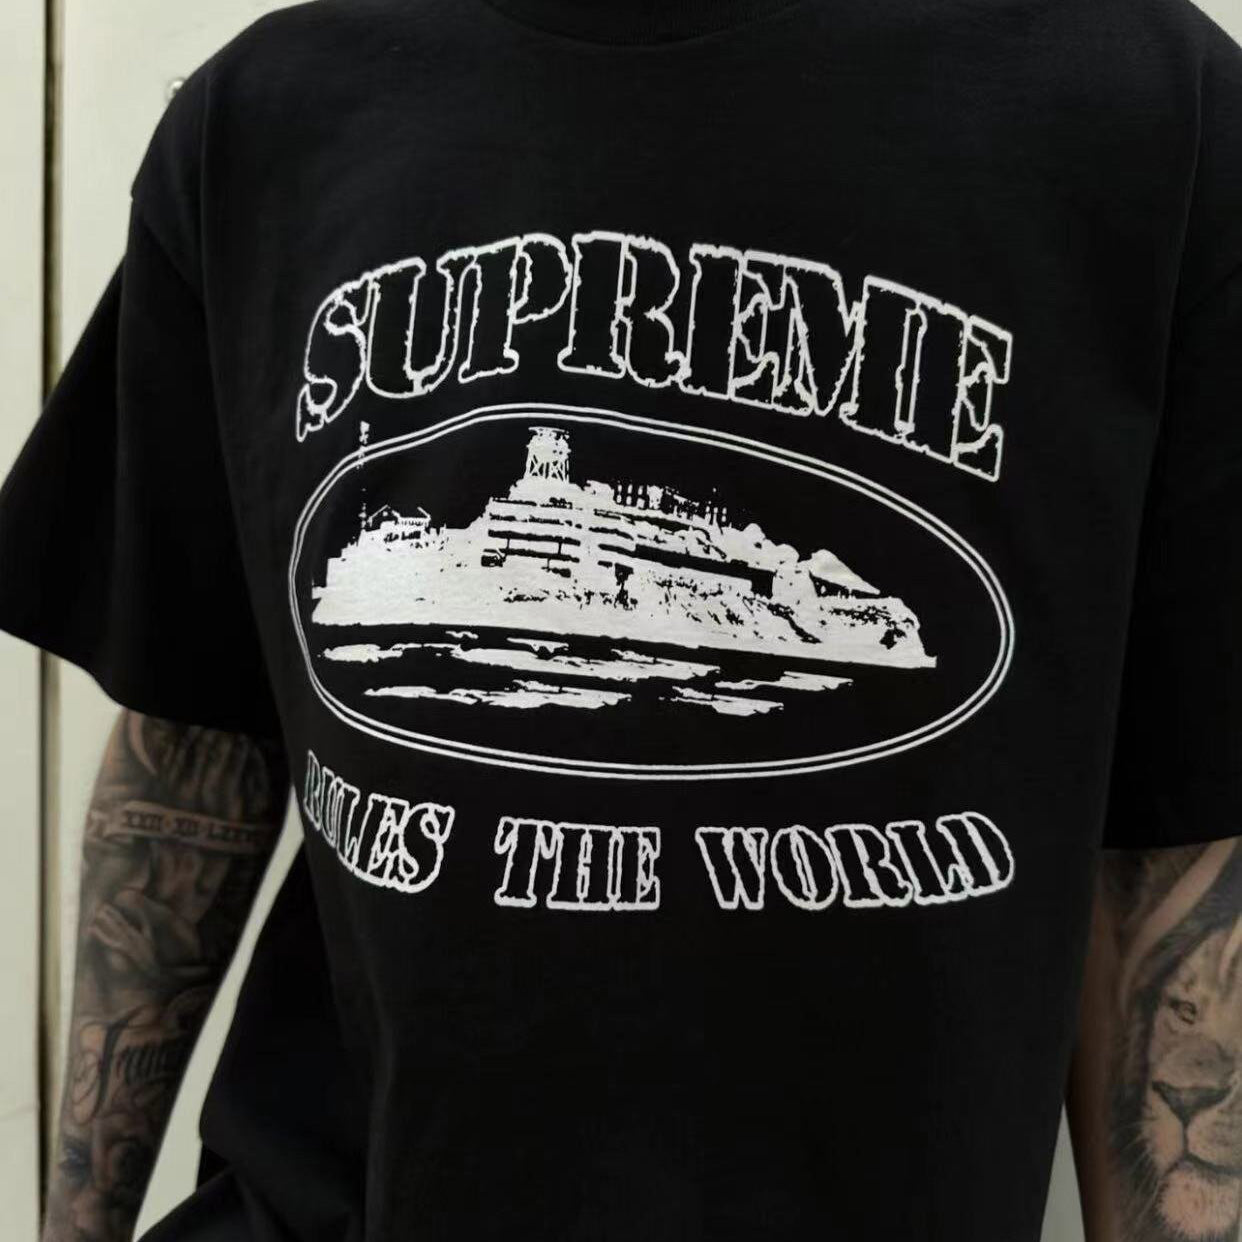 Supreme Island Print T-Shirt